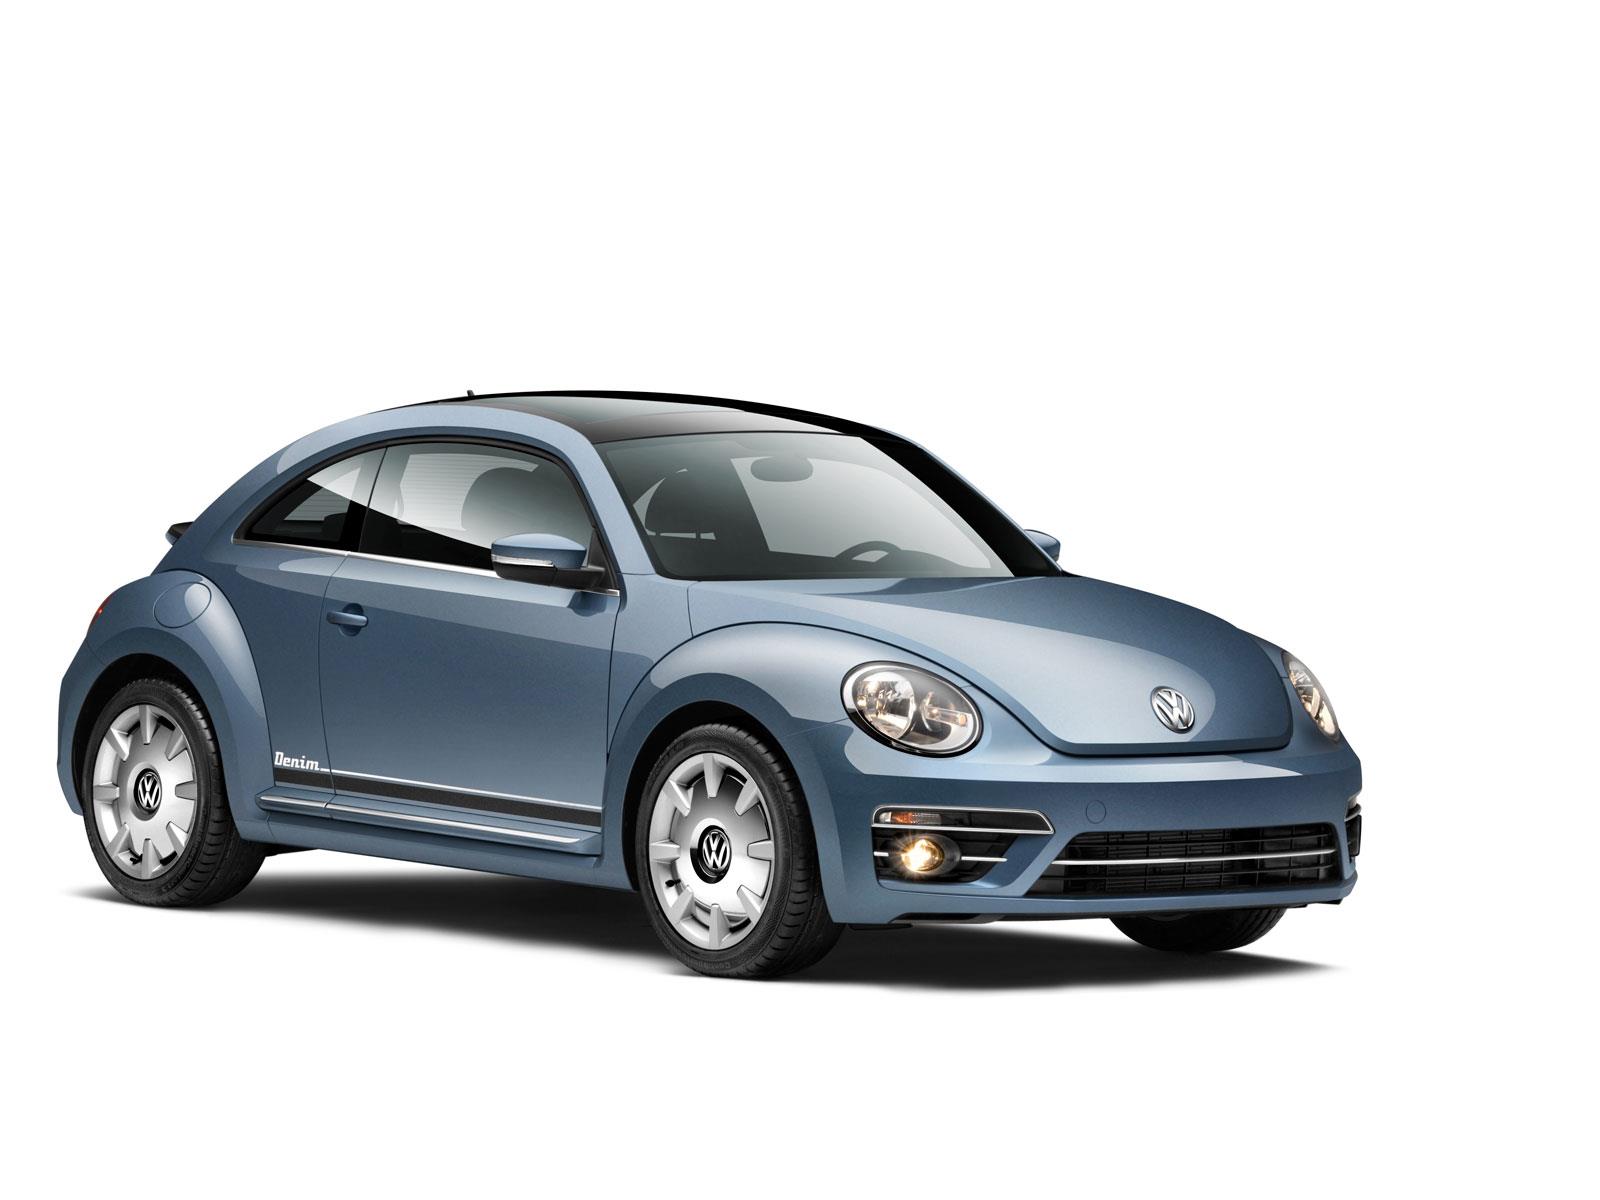 Volkswagen Beetle Denim 2017 llega a M\u00e9xico desde $305,990 pesos  Autocosmos.com